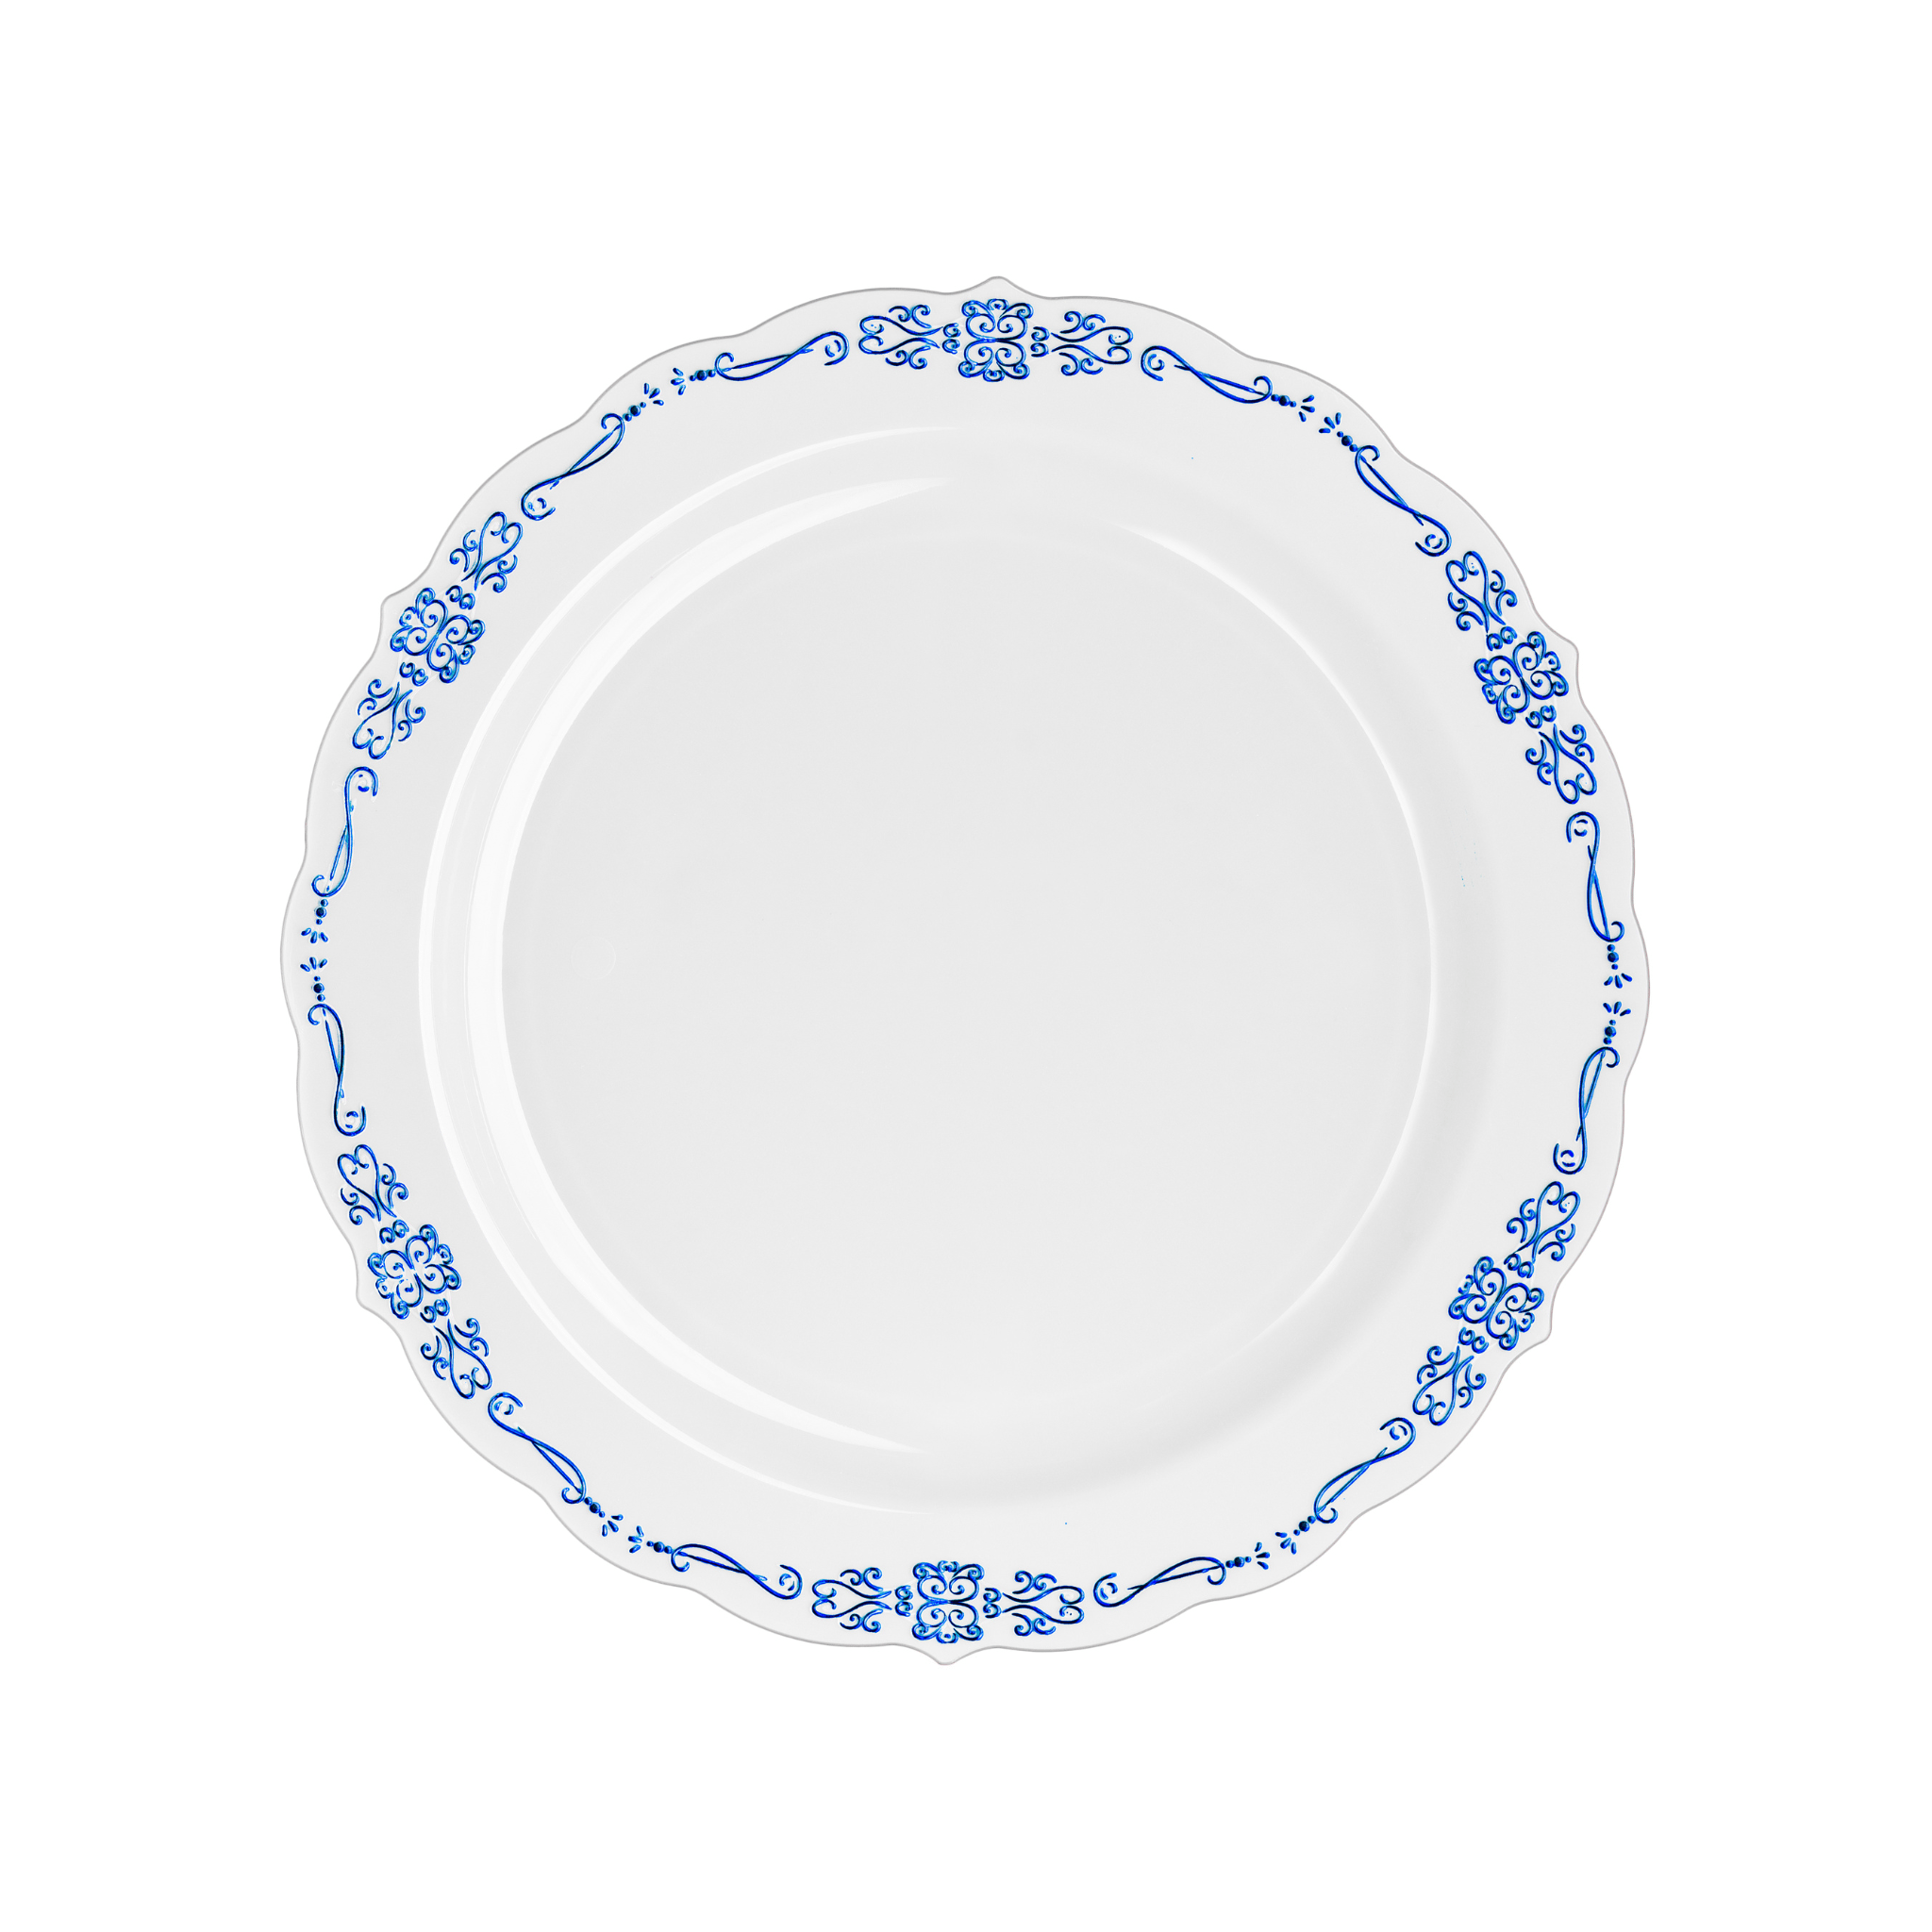 9" White / Navy Victorian Design Plastic Plates (120 Count)